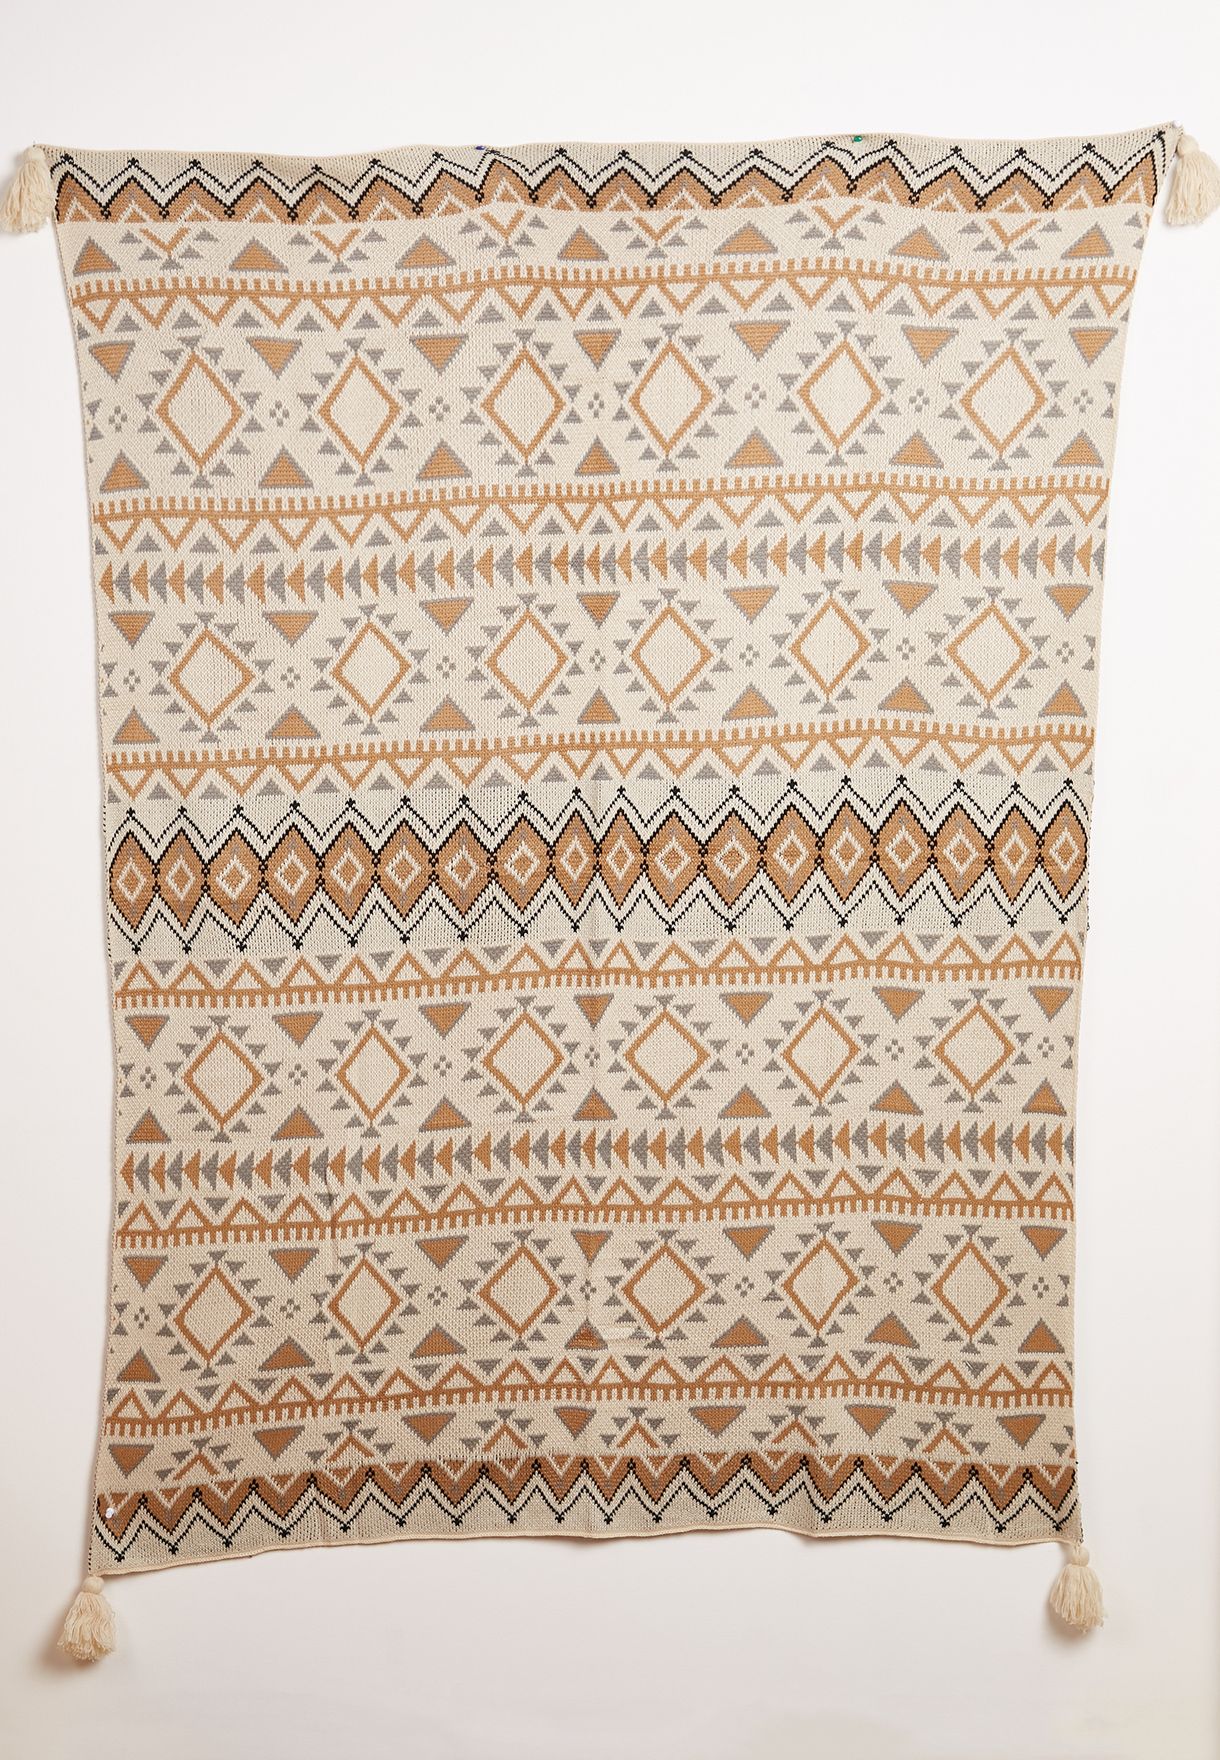 Aztec Printed Woven Blanket 127X152Cm